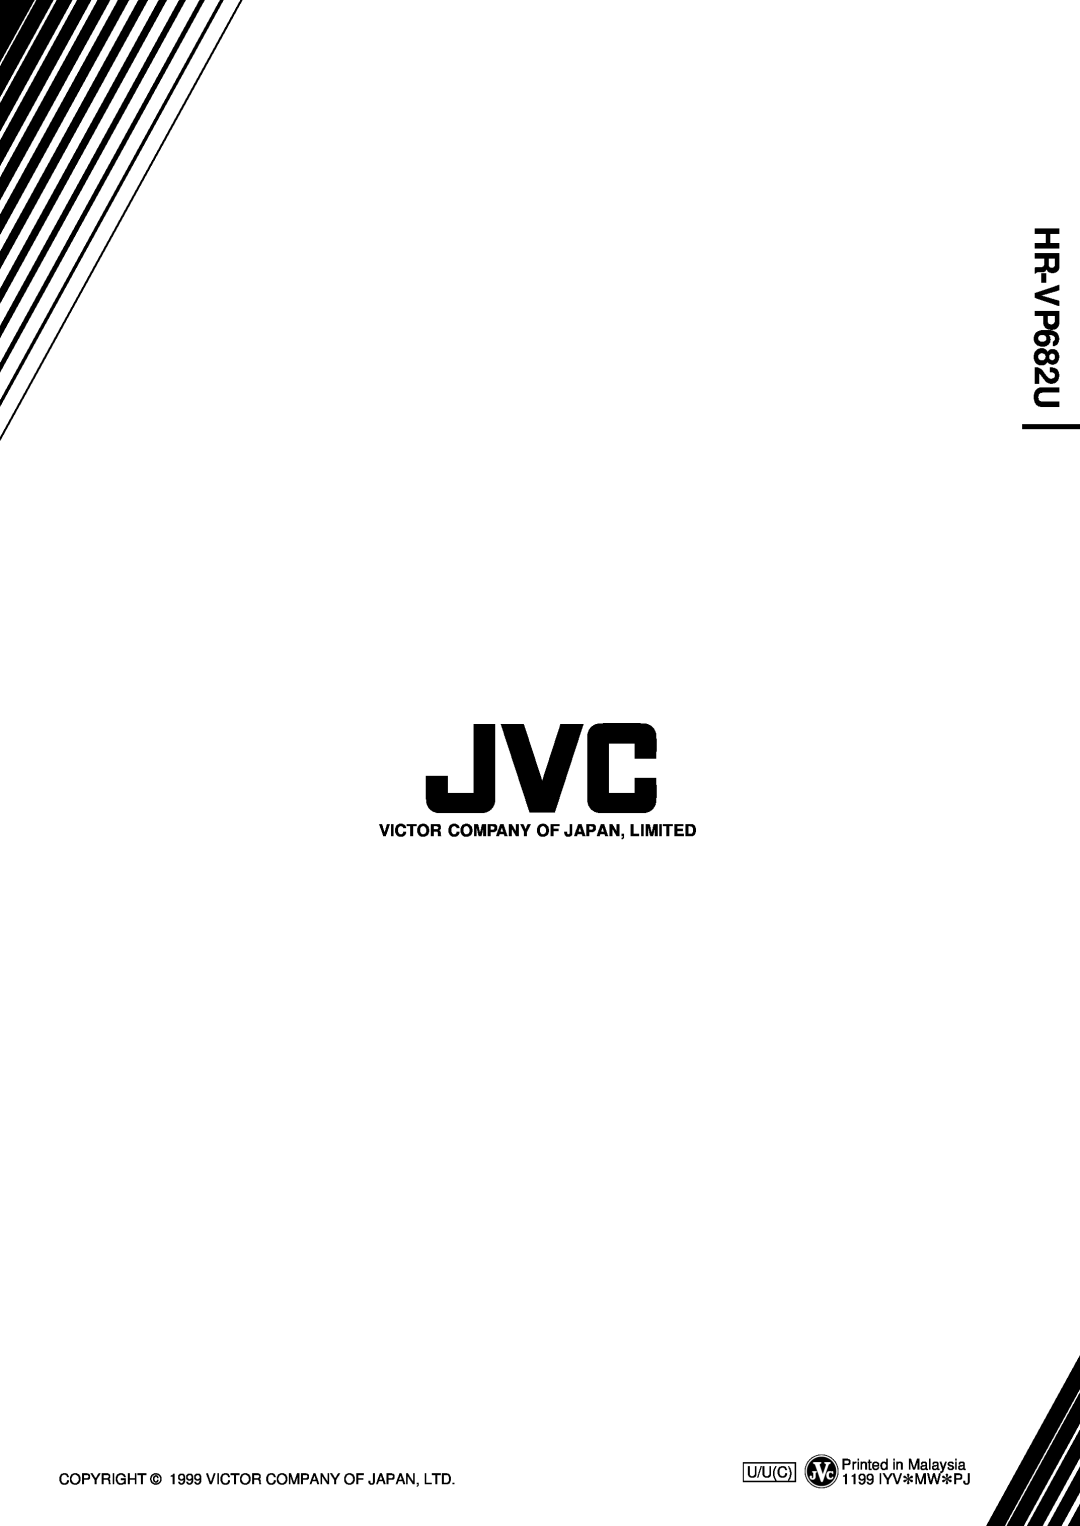 JVC HR-VP682U manual Victor Company Of Japan, Limited, U/Uc, Printed in Malaysia 1199 IYV*MW*PJ 